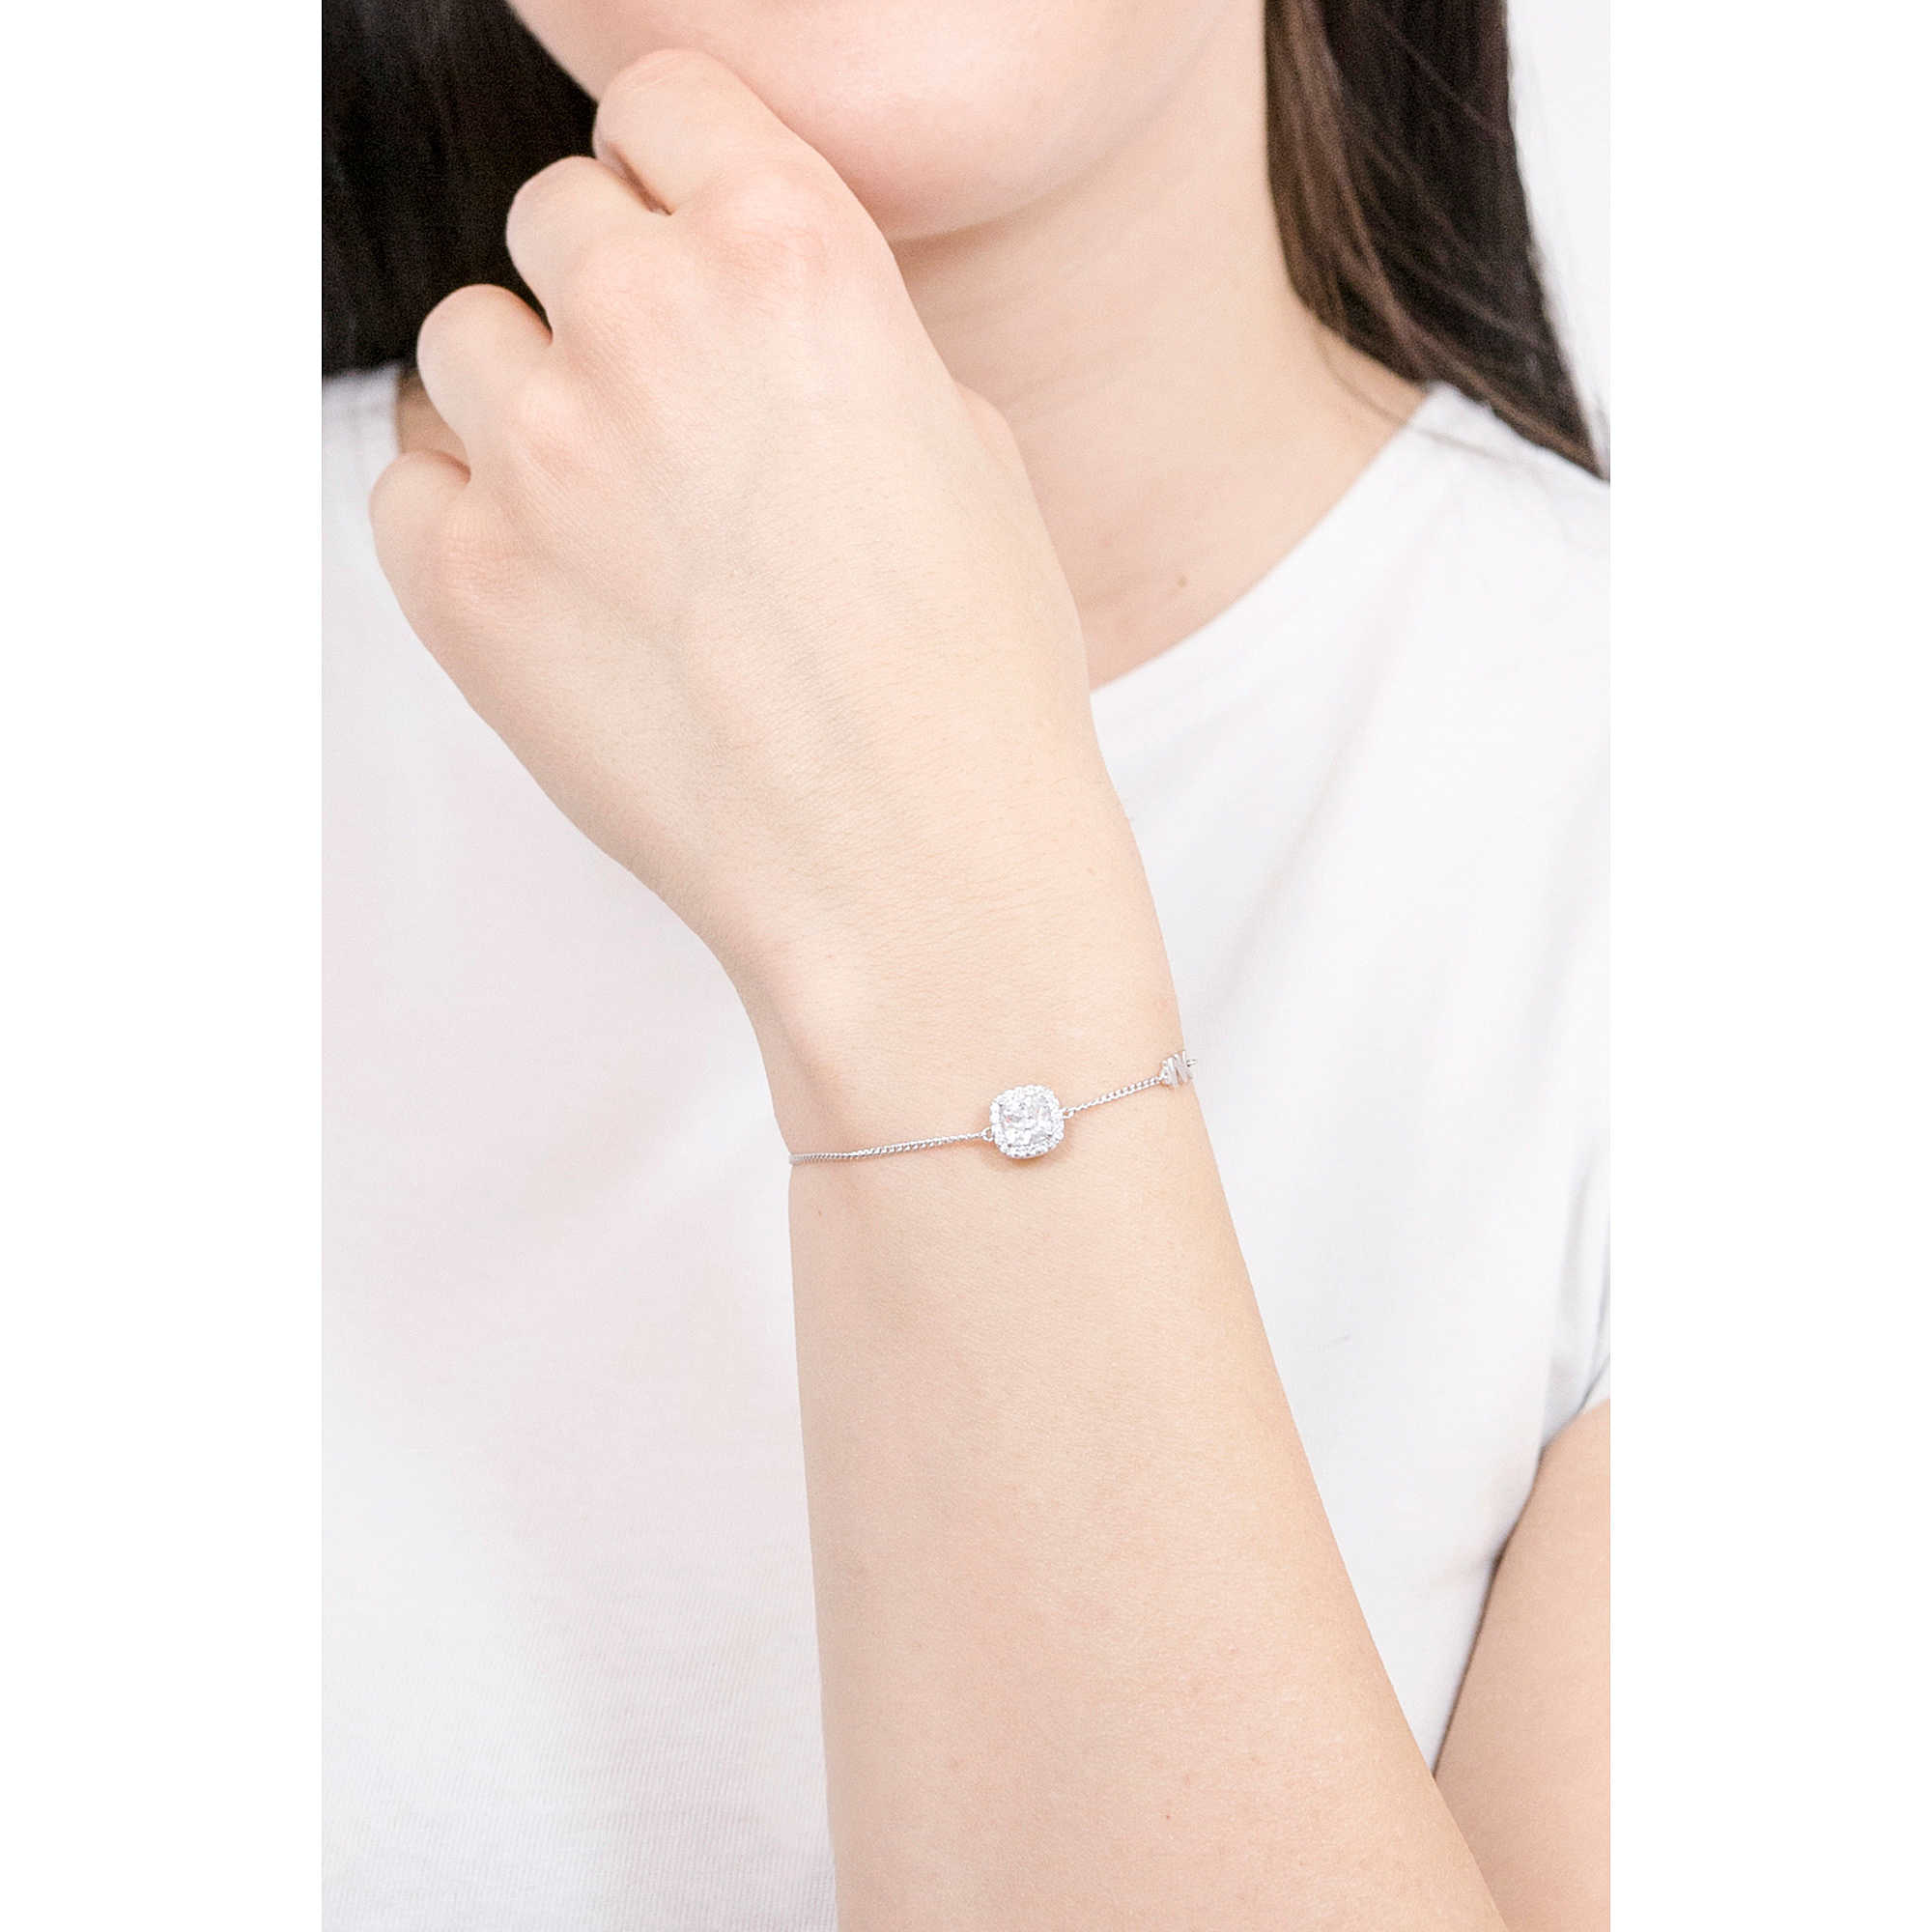 Mua Michael Kors Womens MK3223 Slim Runway Rose GoldTone Stainless Steel  Bracelet Watch trên Amazon Mỹ chính hãng 2023  Giaonhan247